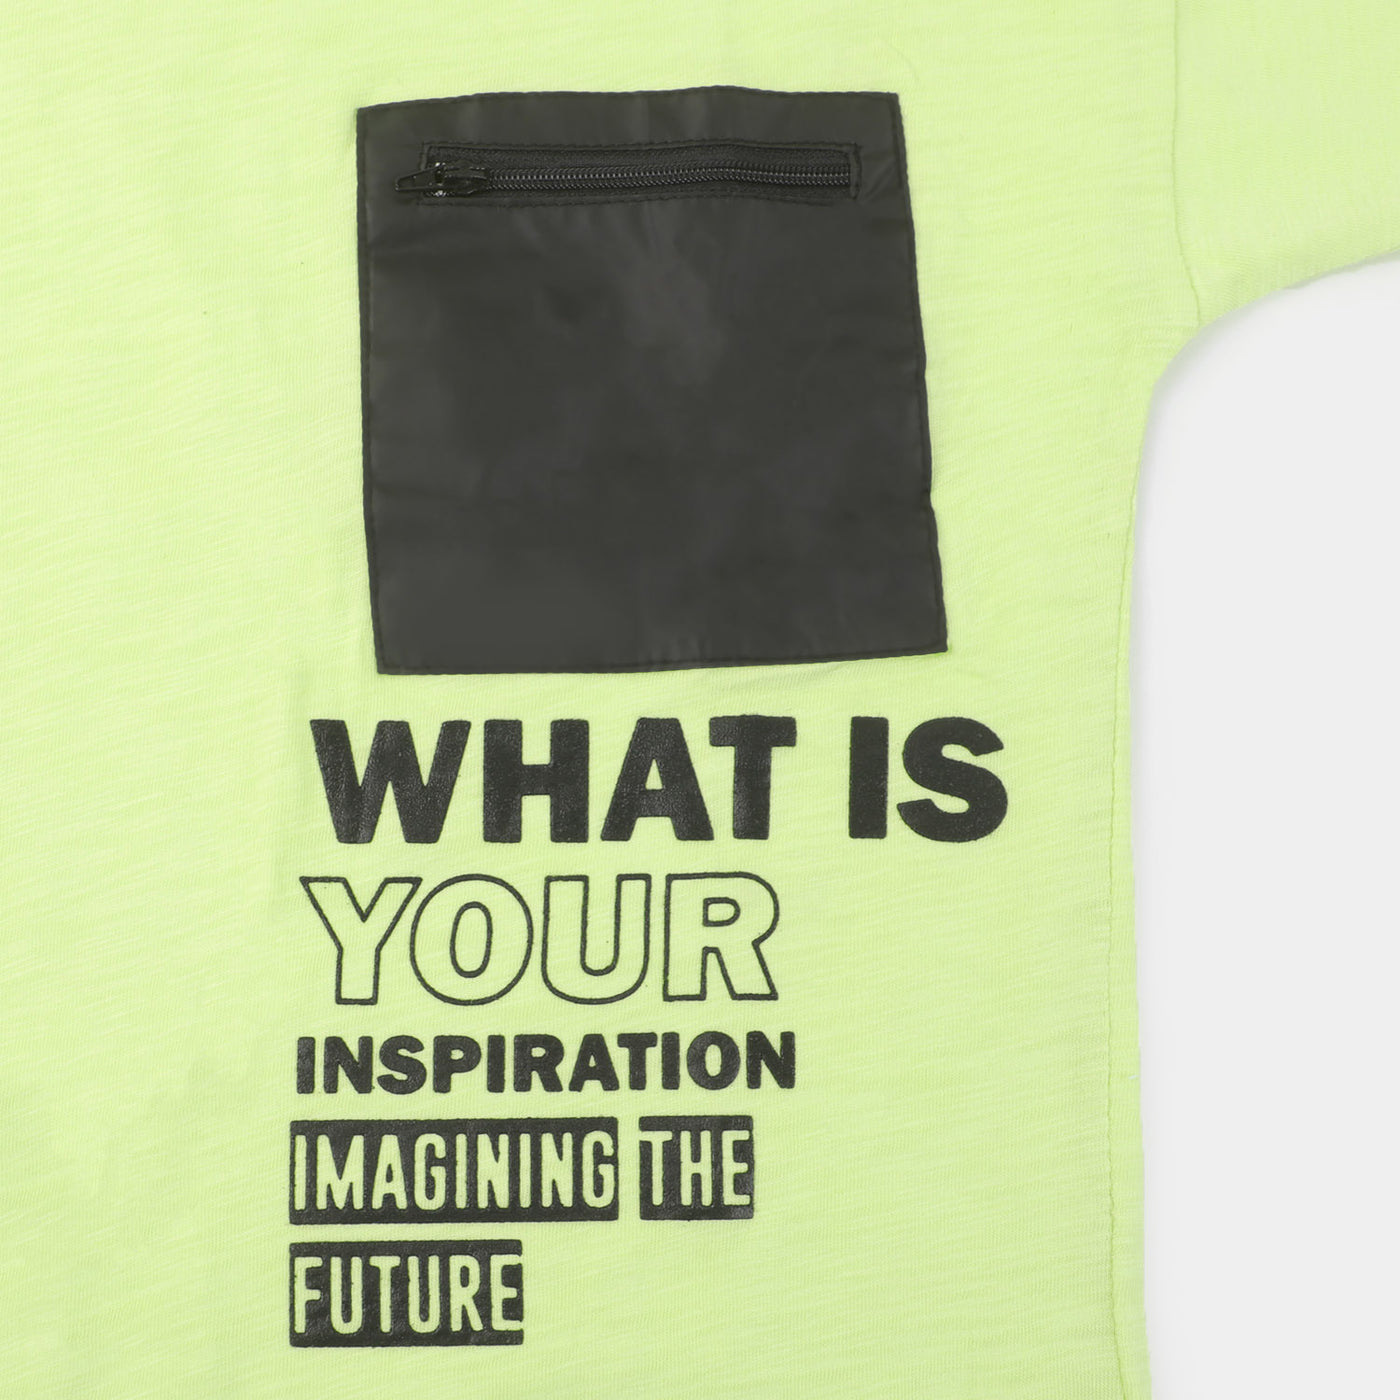 Boys Cotton T-Shirt Inspiration - Lime Green